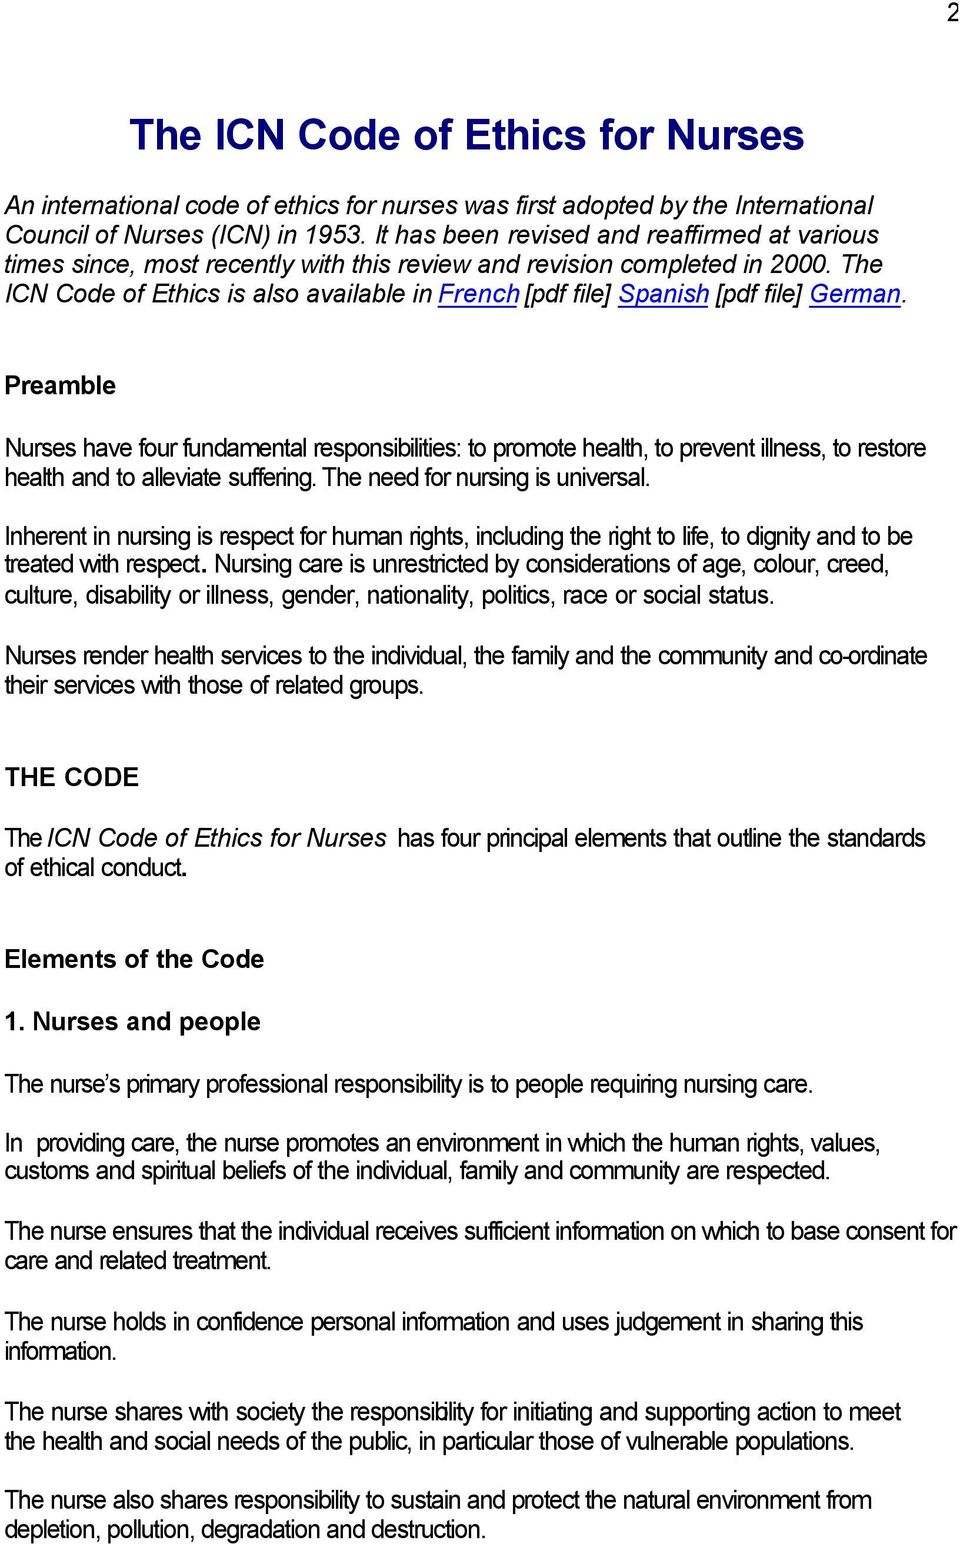 Nurse code of ethics